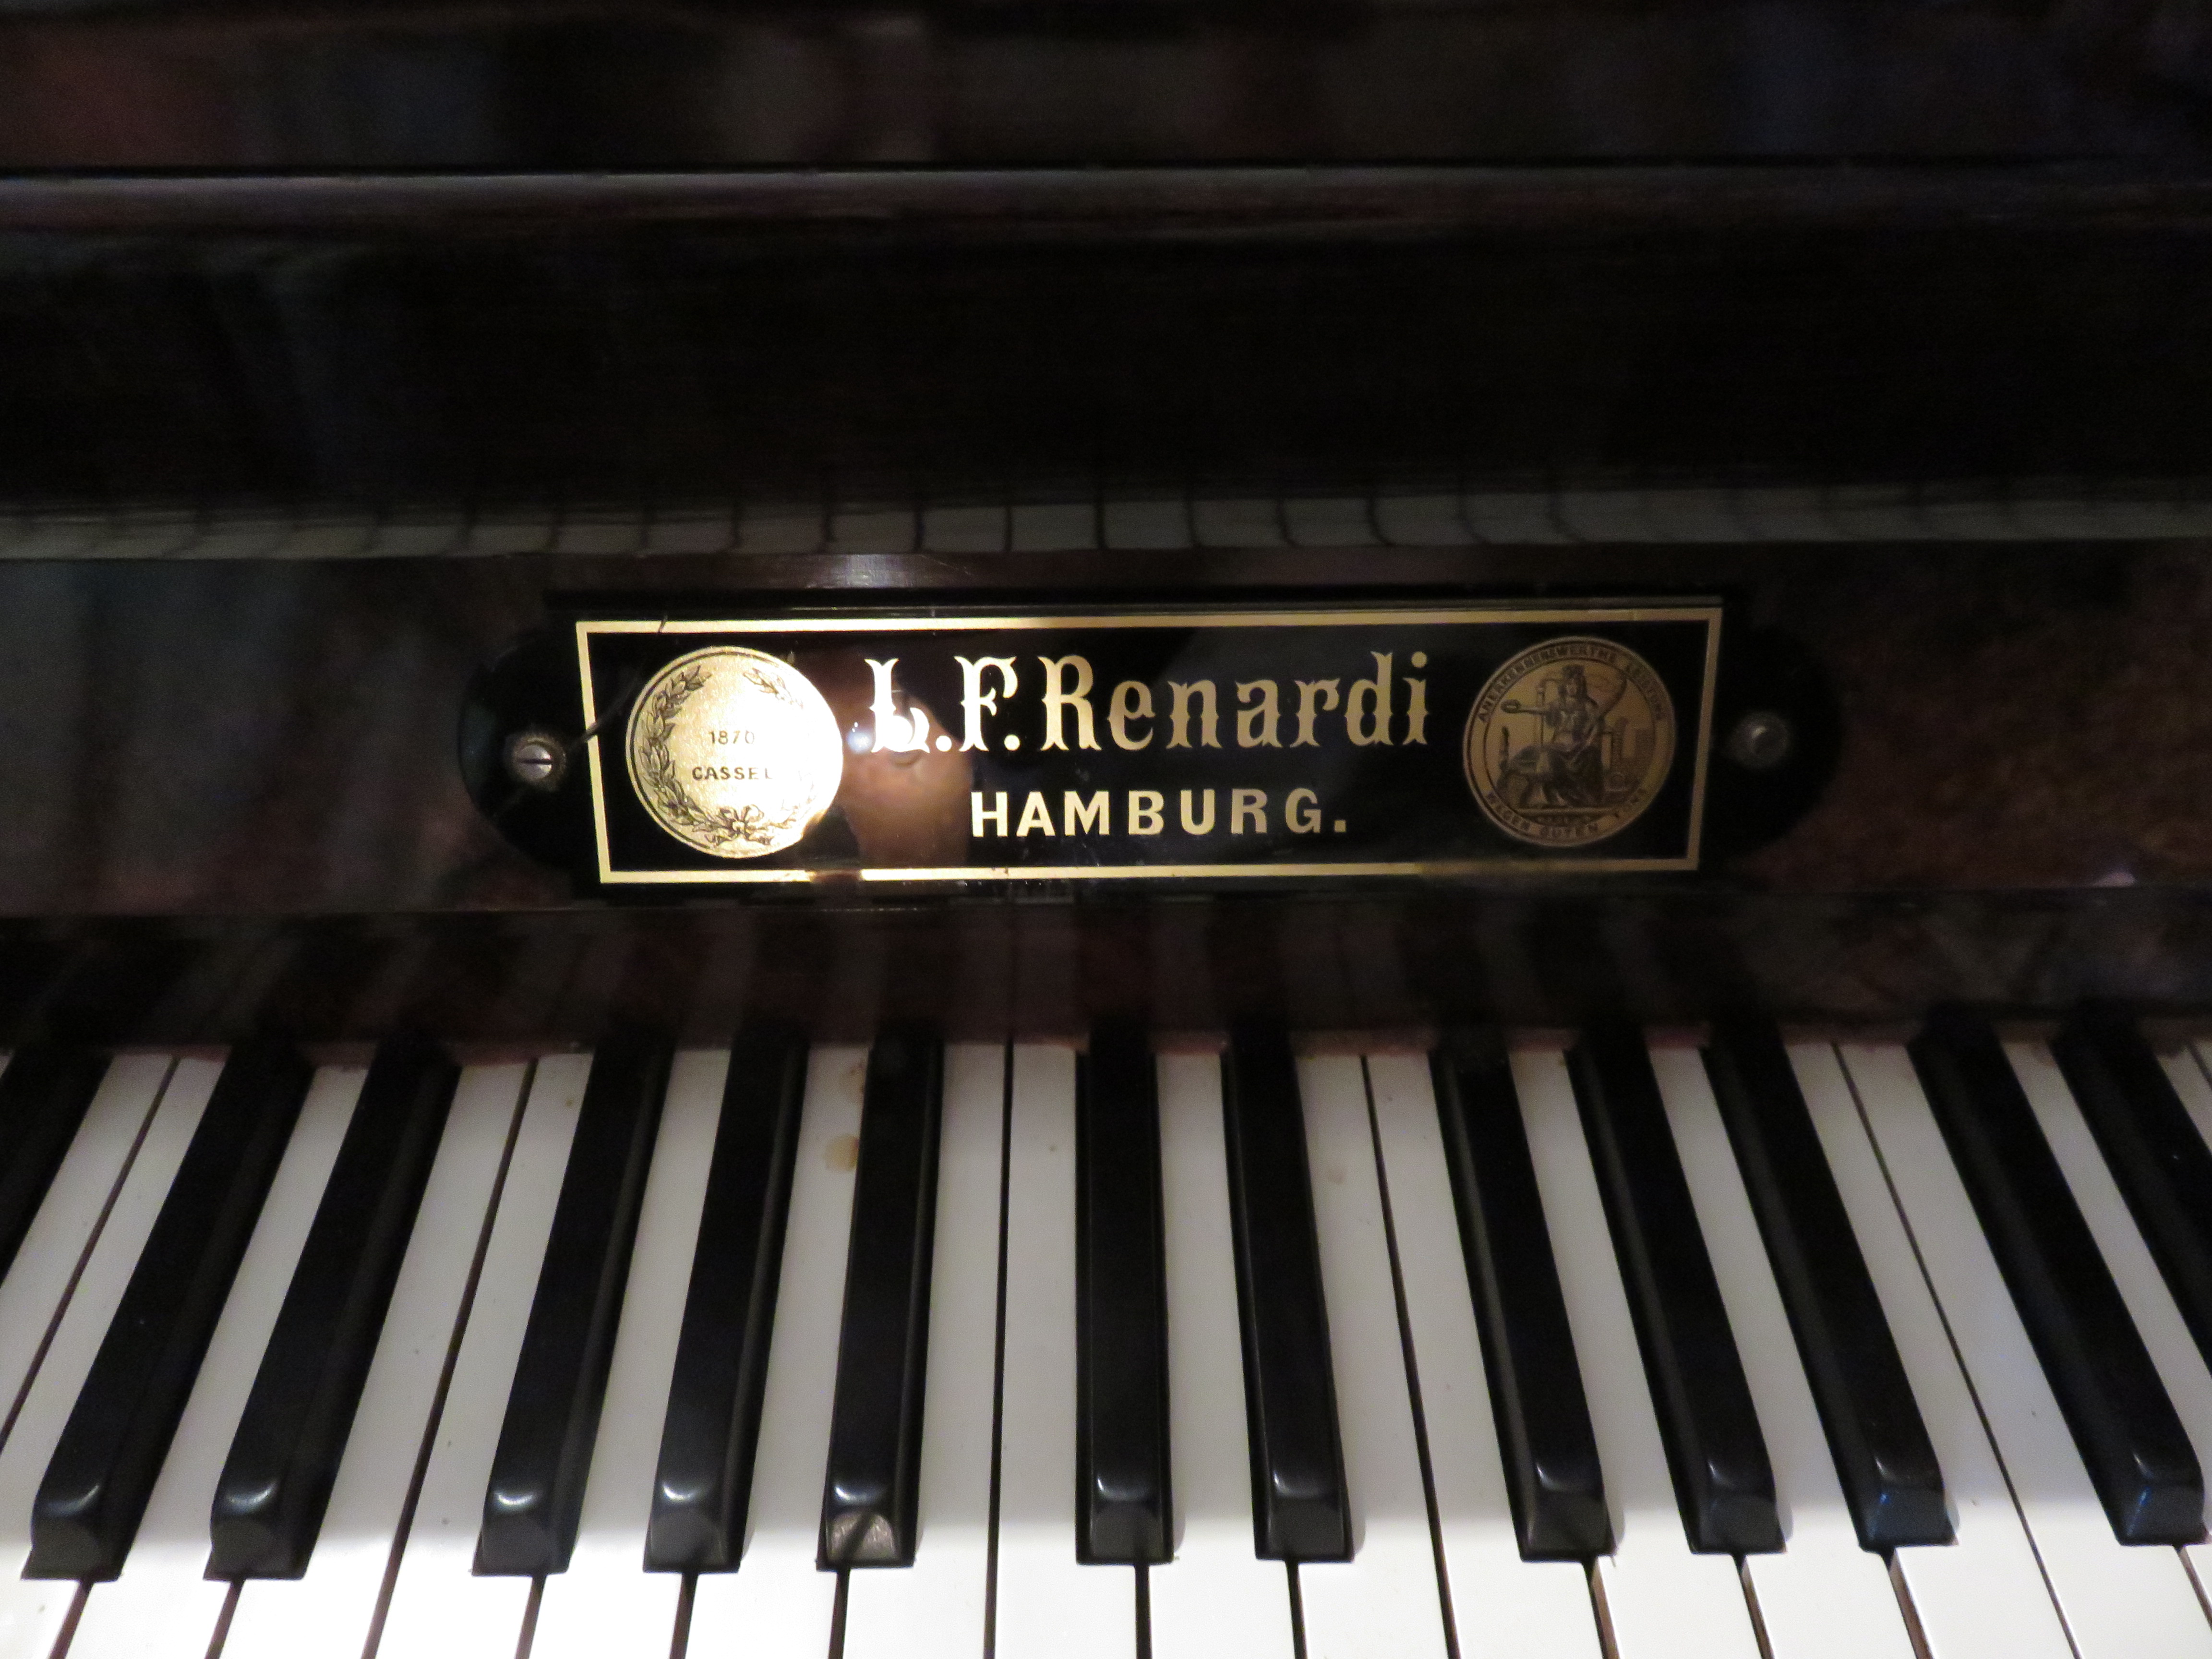 Renardi piano built in Hamburg